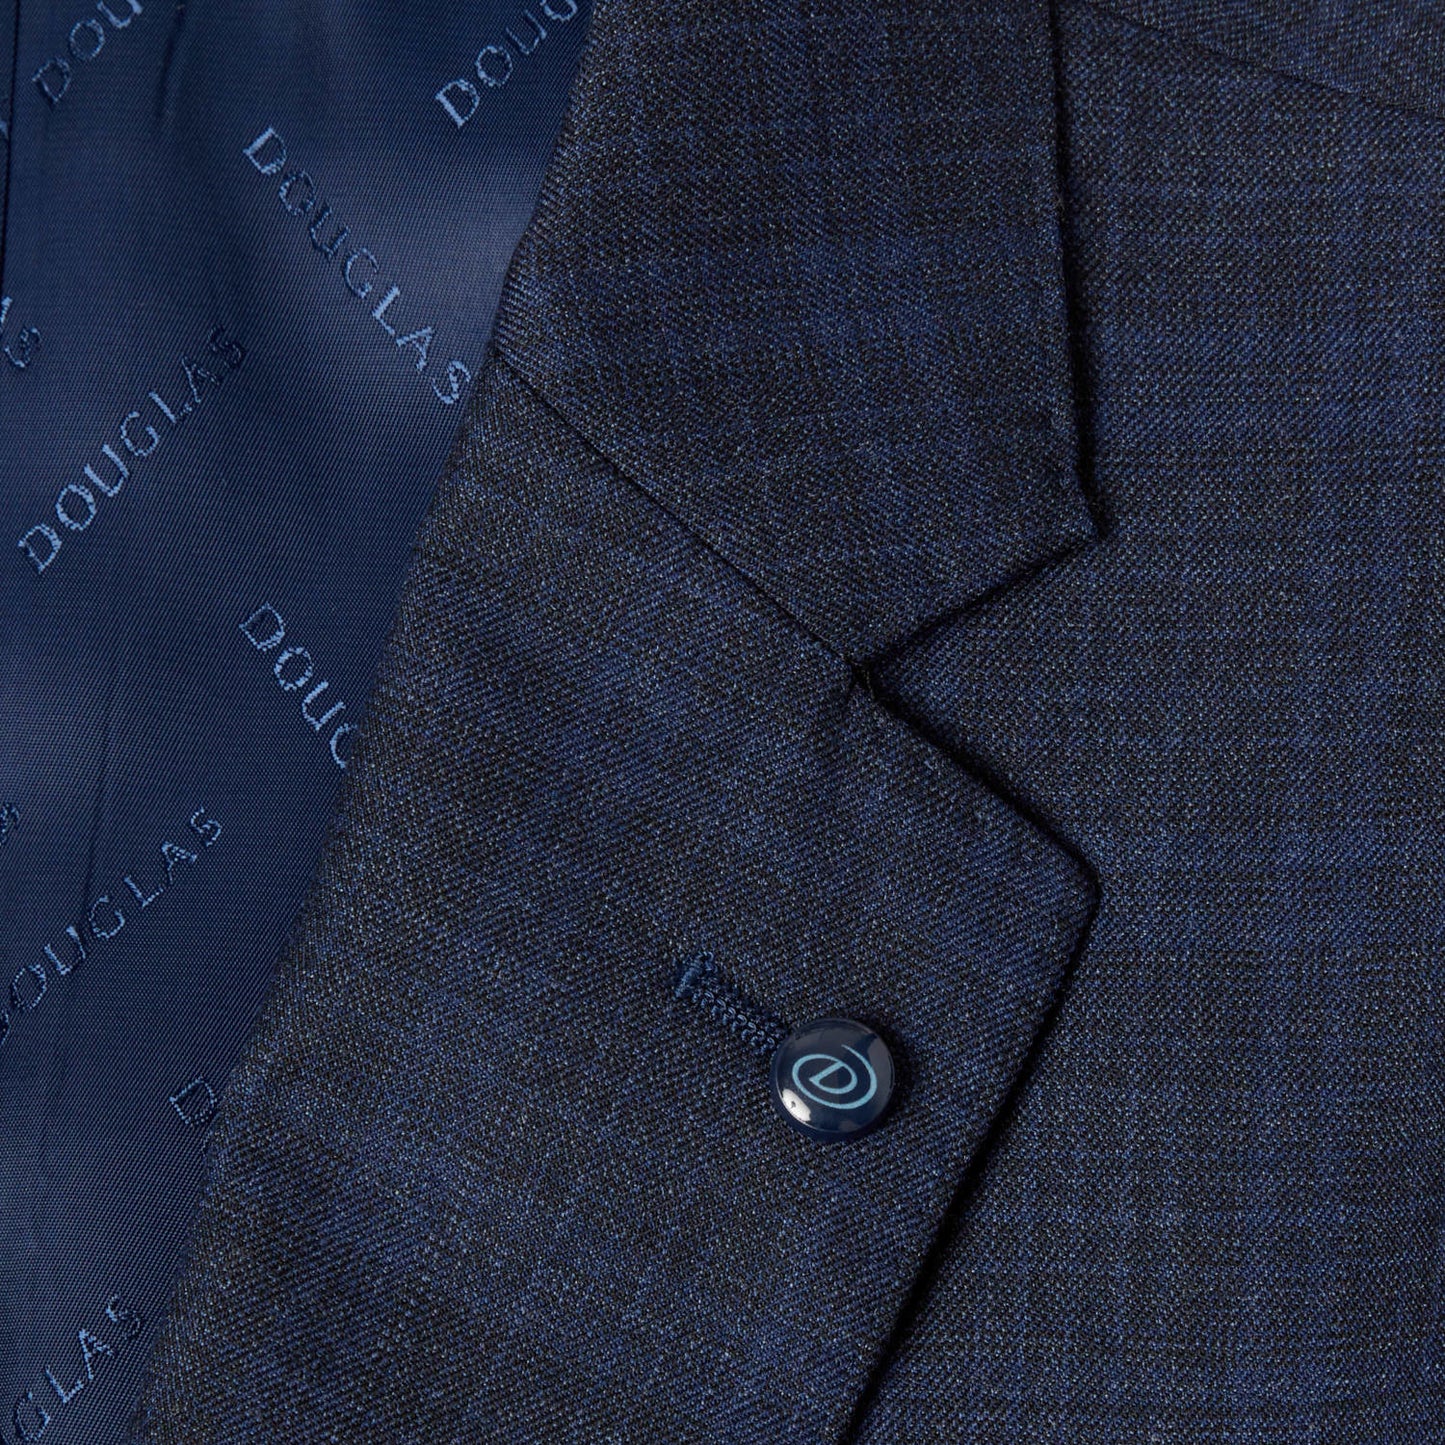 Douglas 45067 28 Slate Blue Valdino Suit Jacket